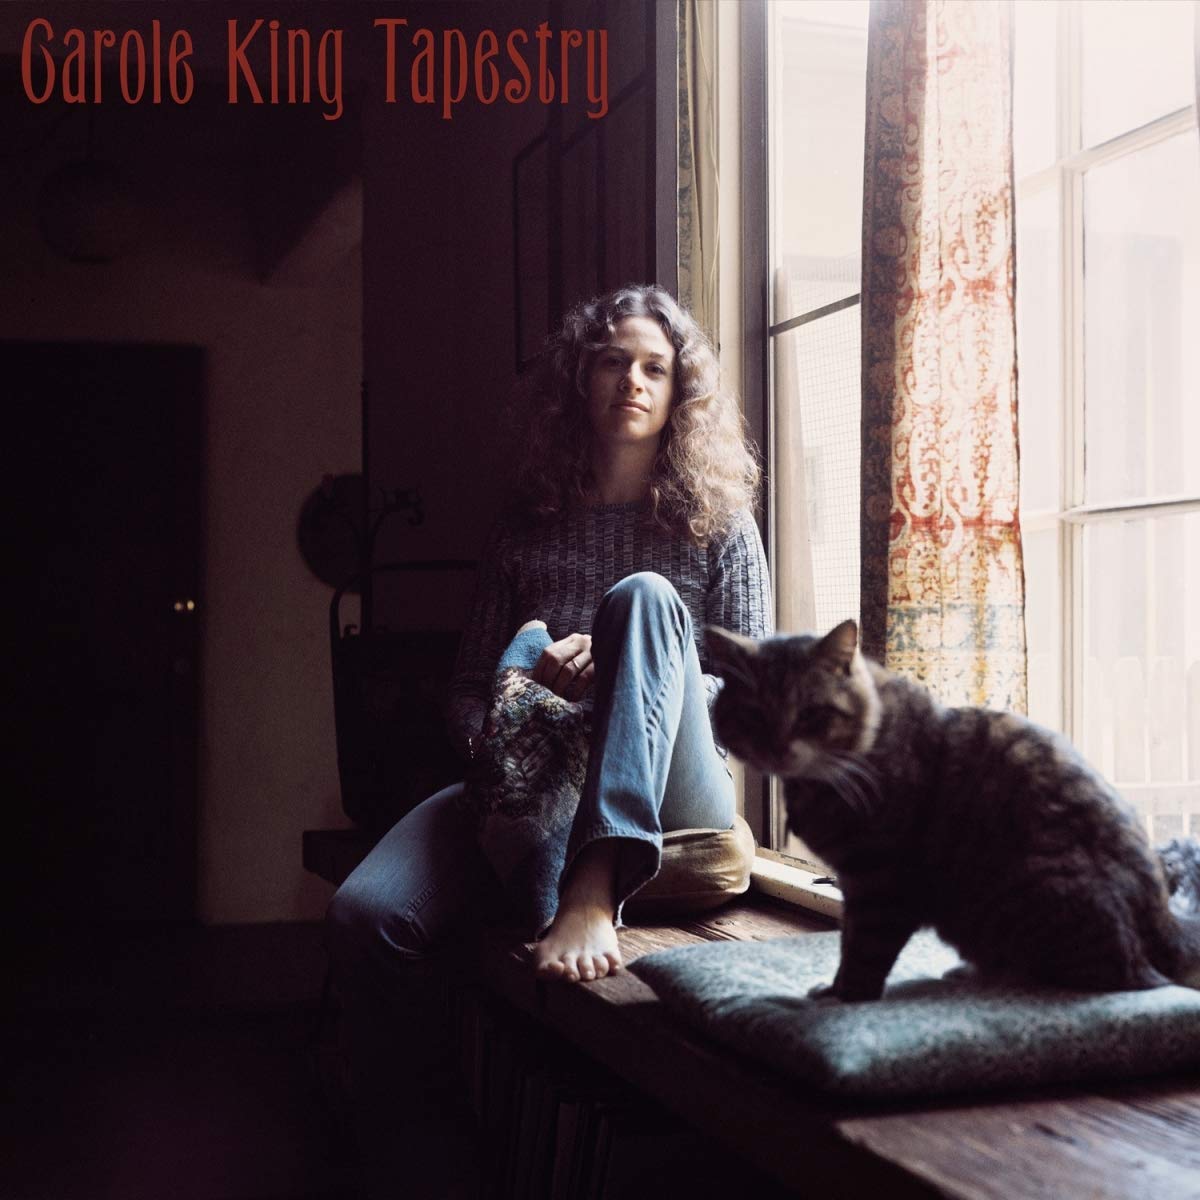 Carole King • tapisserie • vinyle